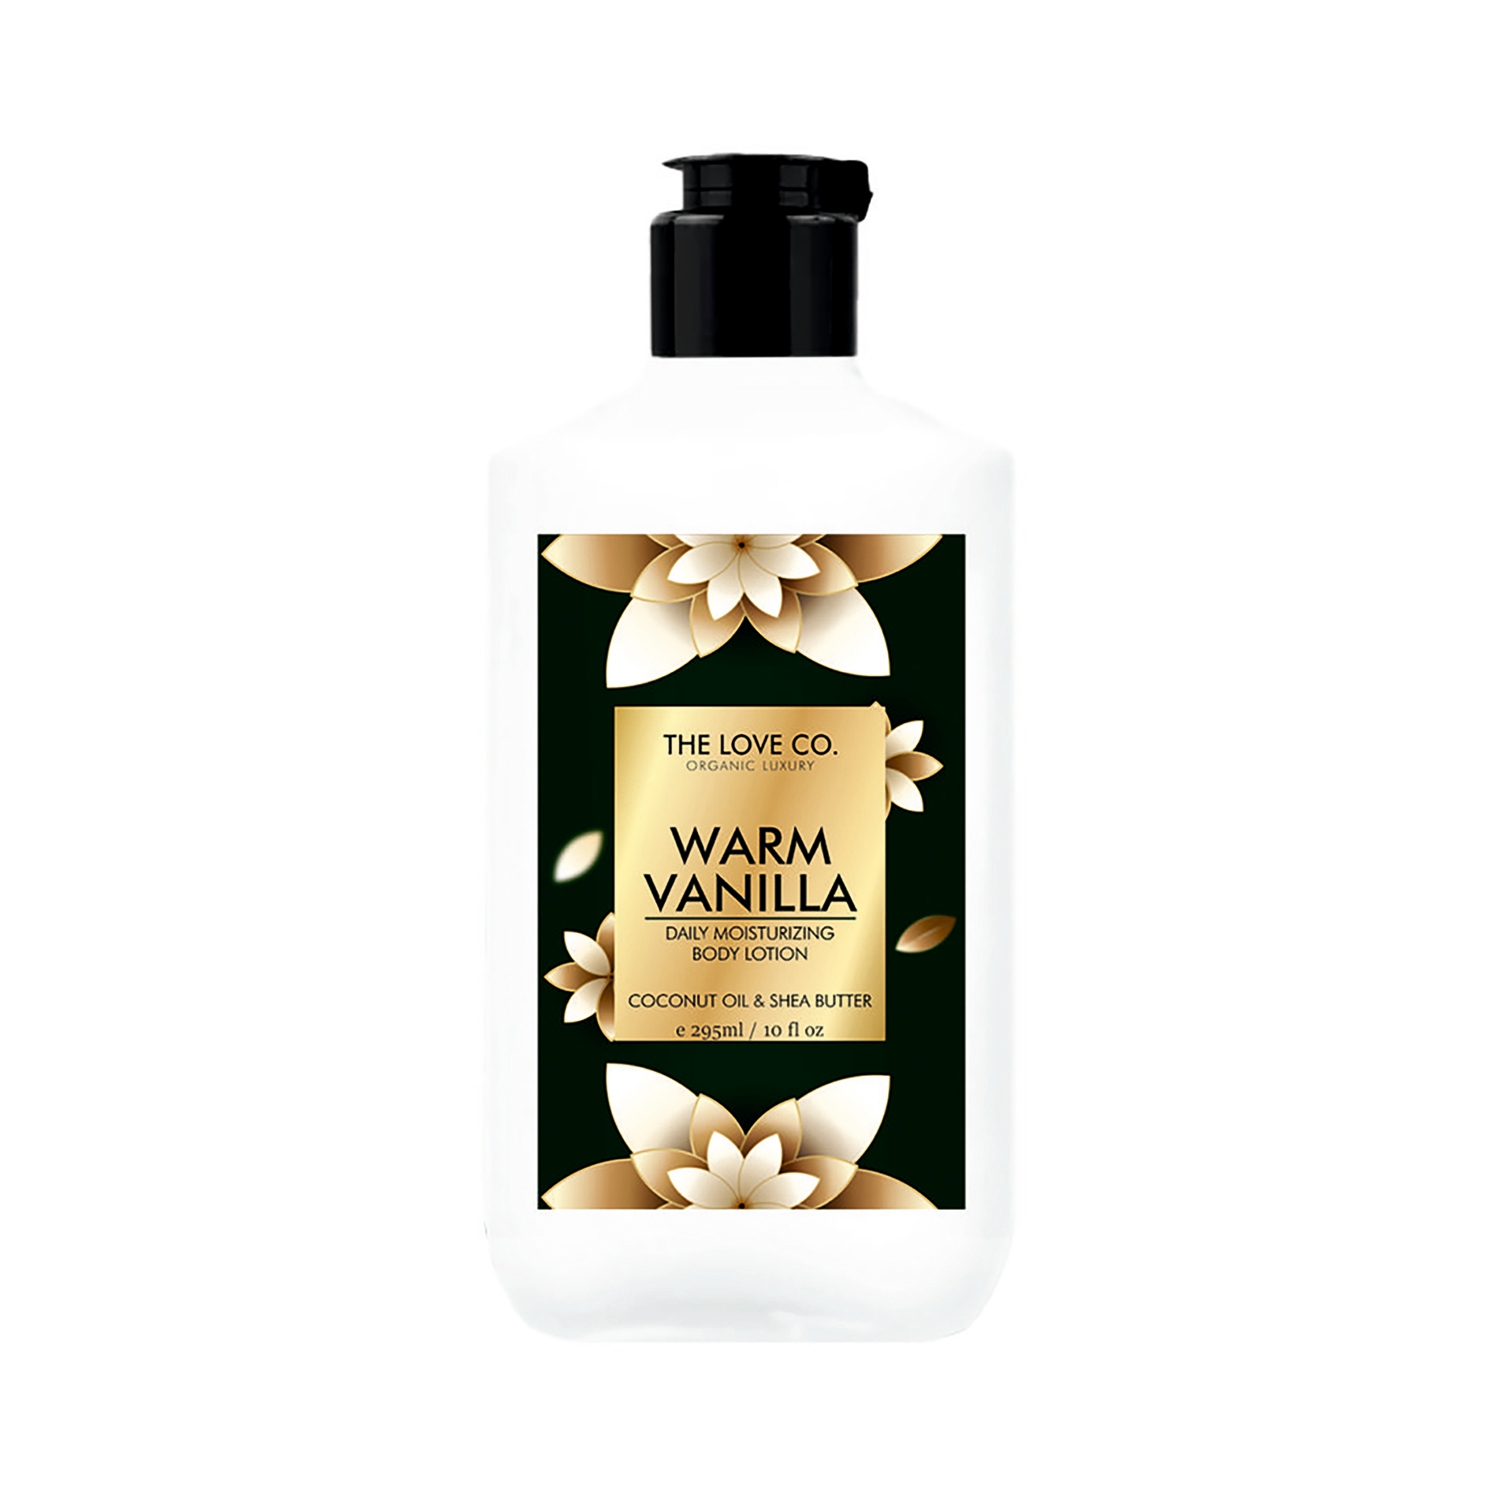 THE LOVE CO. | THE LOVE CO. Warm Vanilla Daily Moisturizing Body Lotion (295ml)